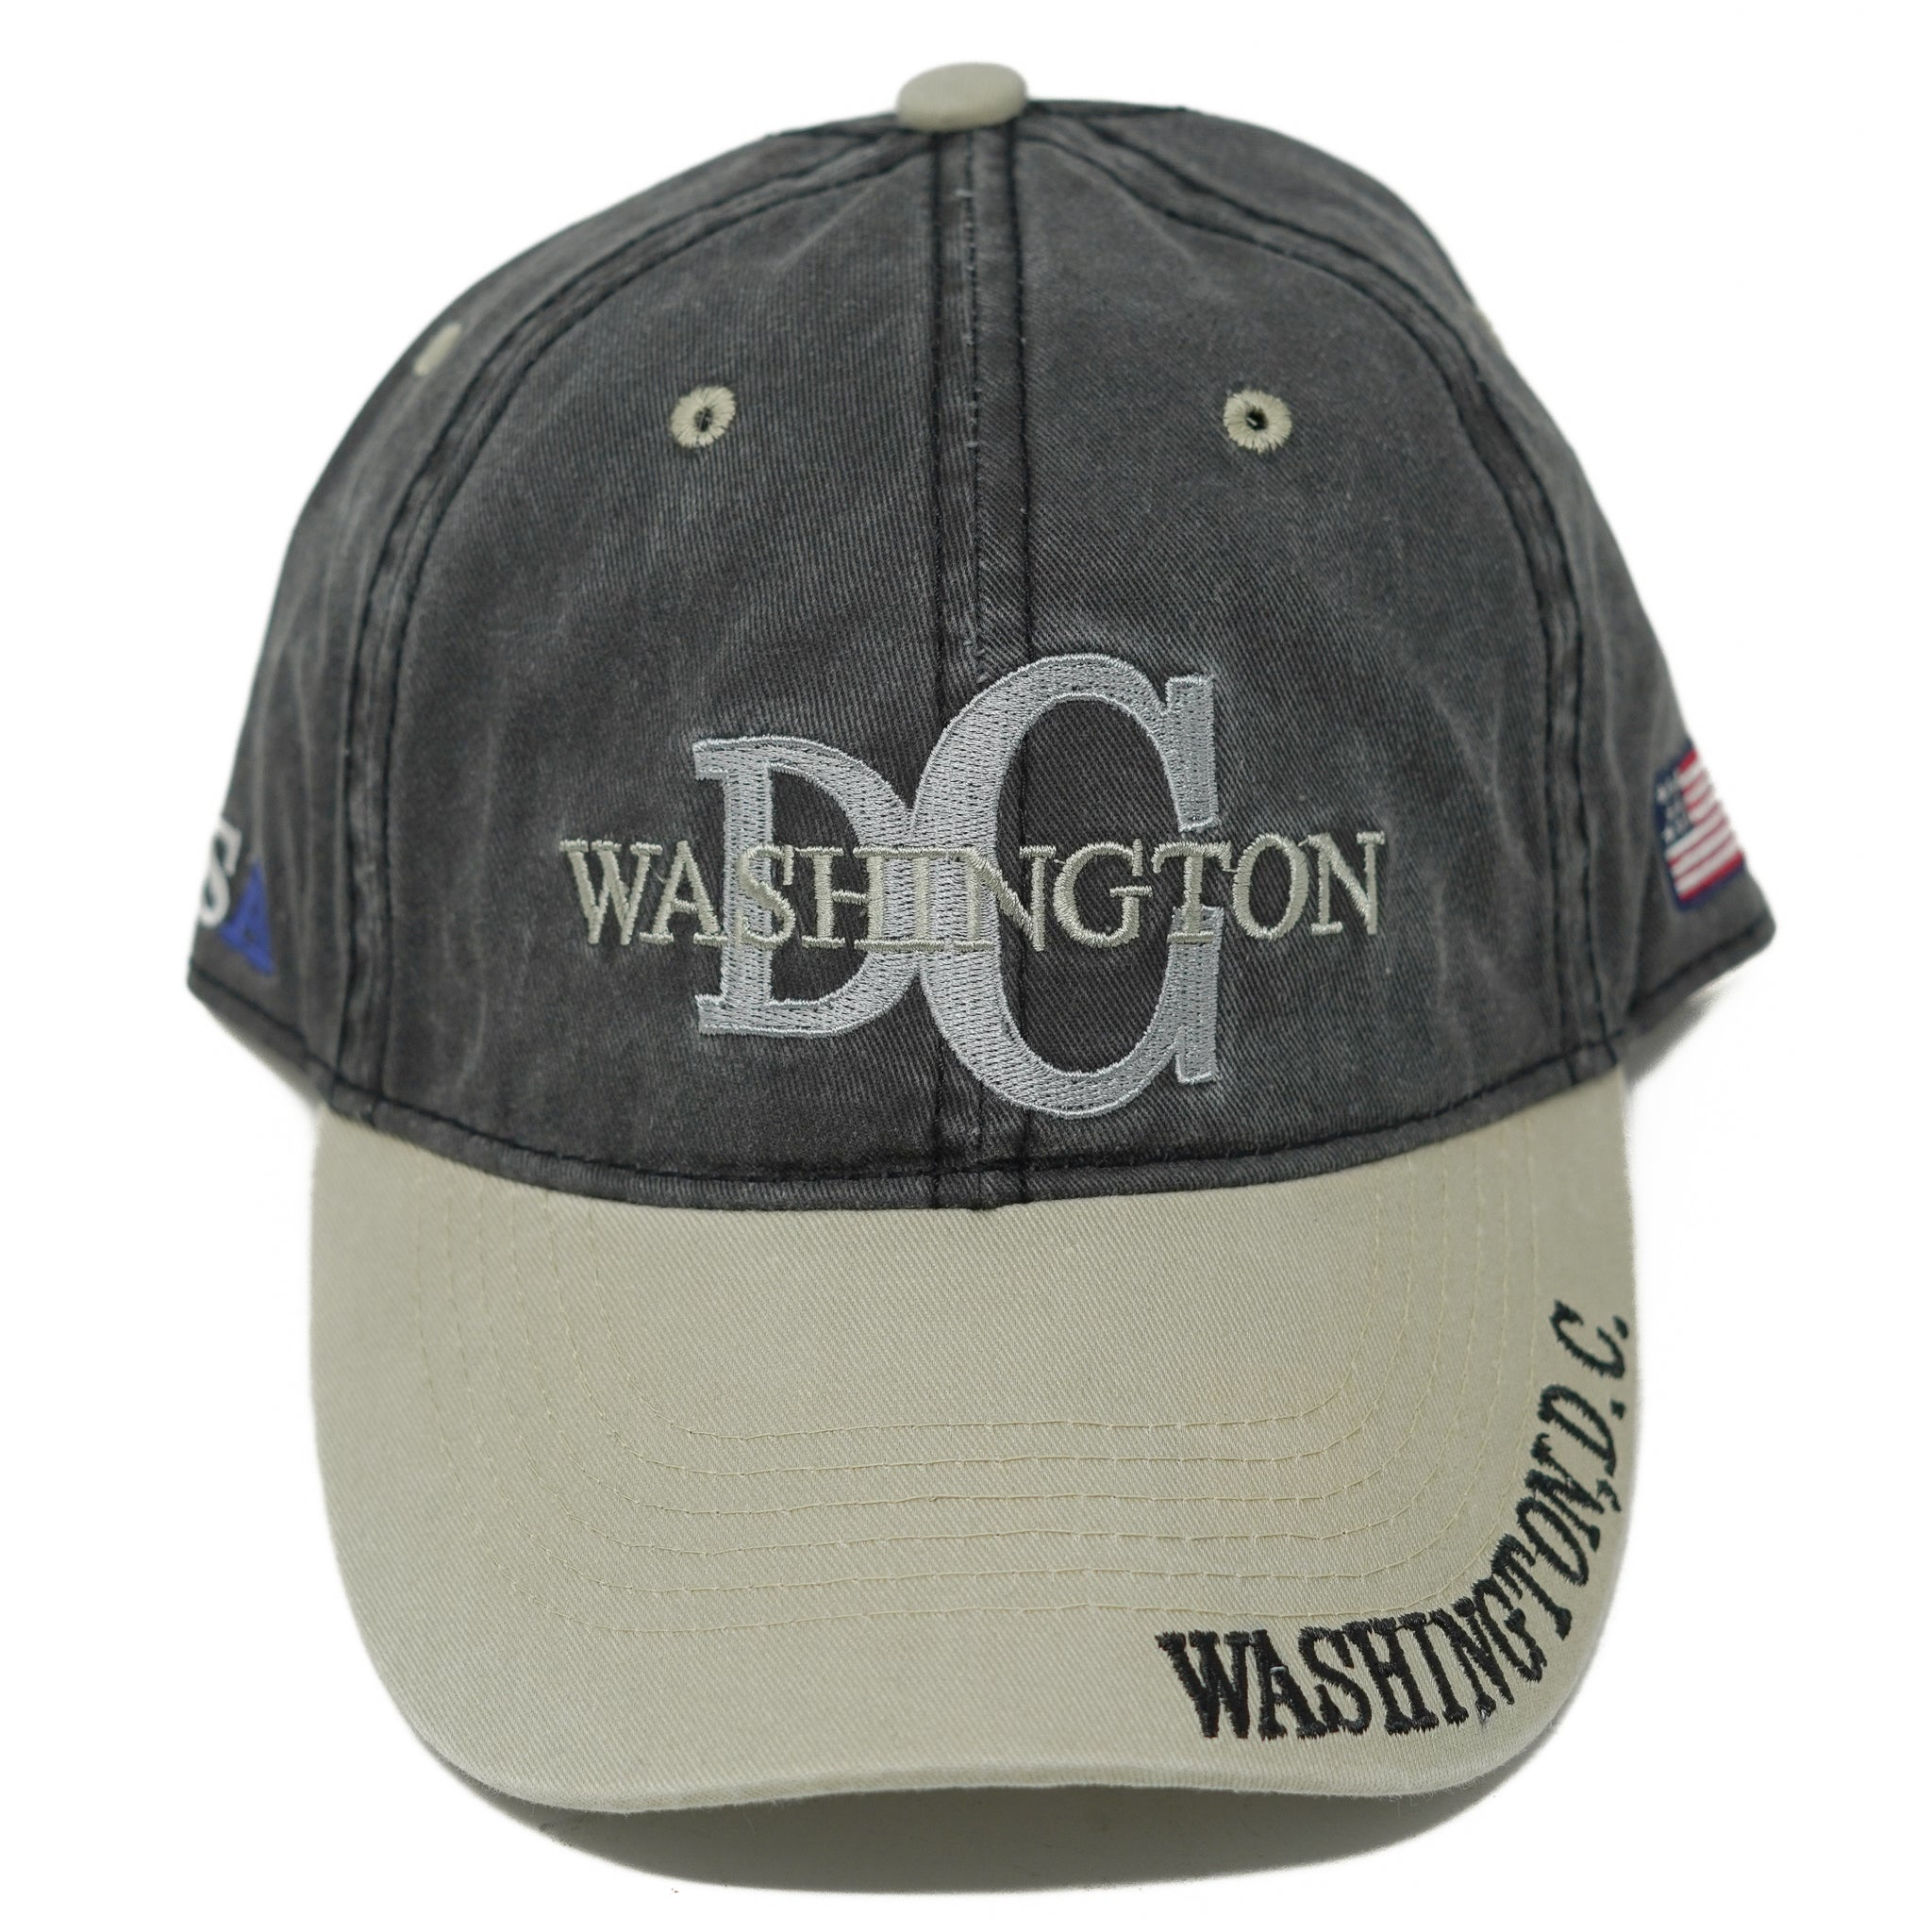 Authentic Washington DC Logo Cap